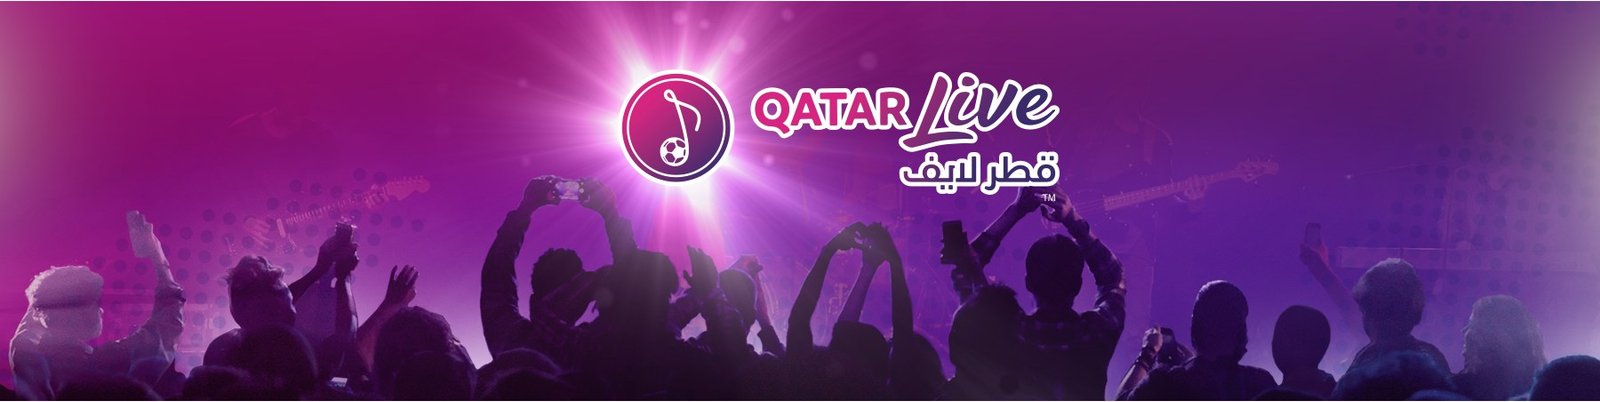 Qatar-live